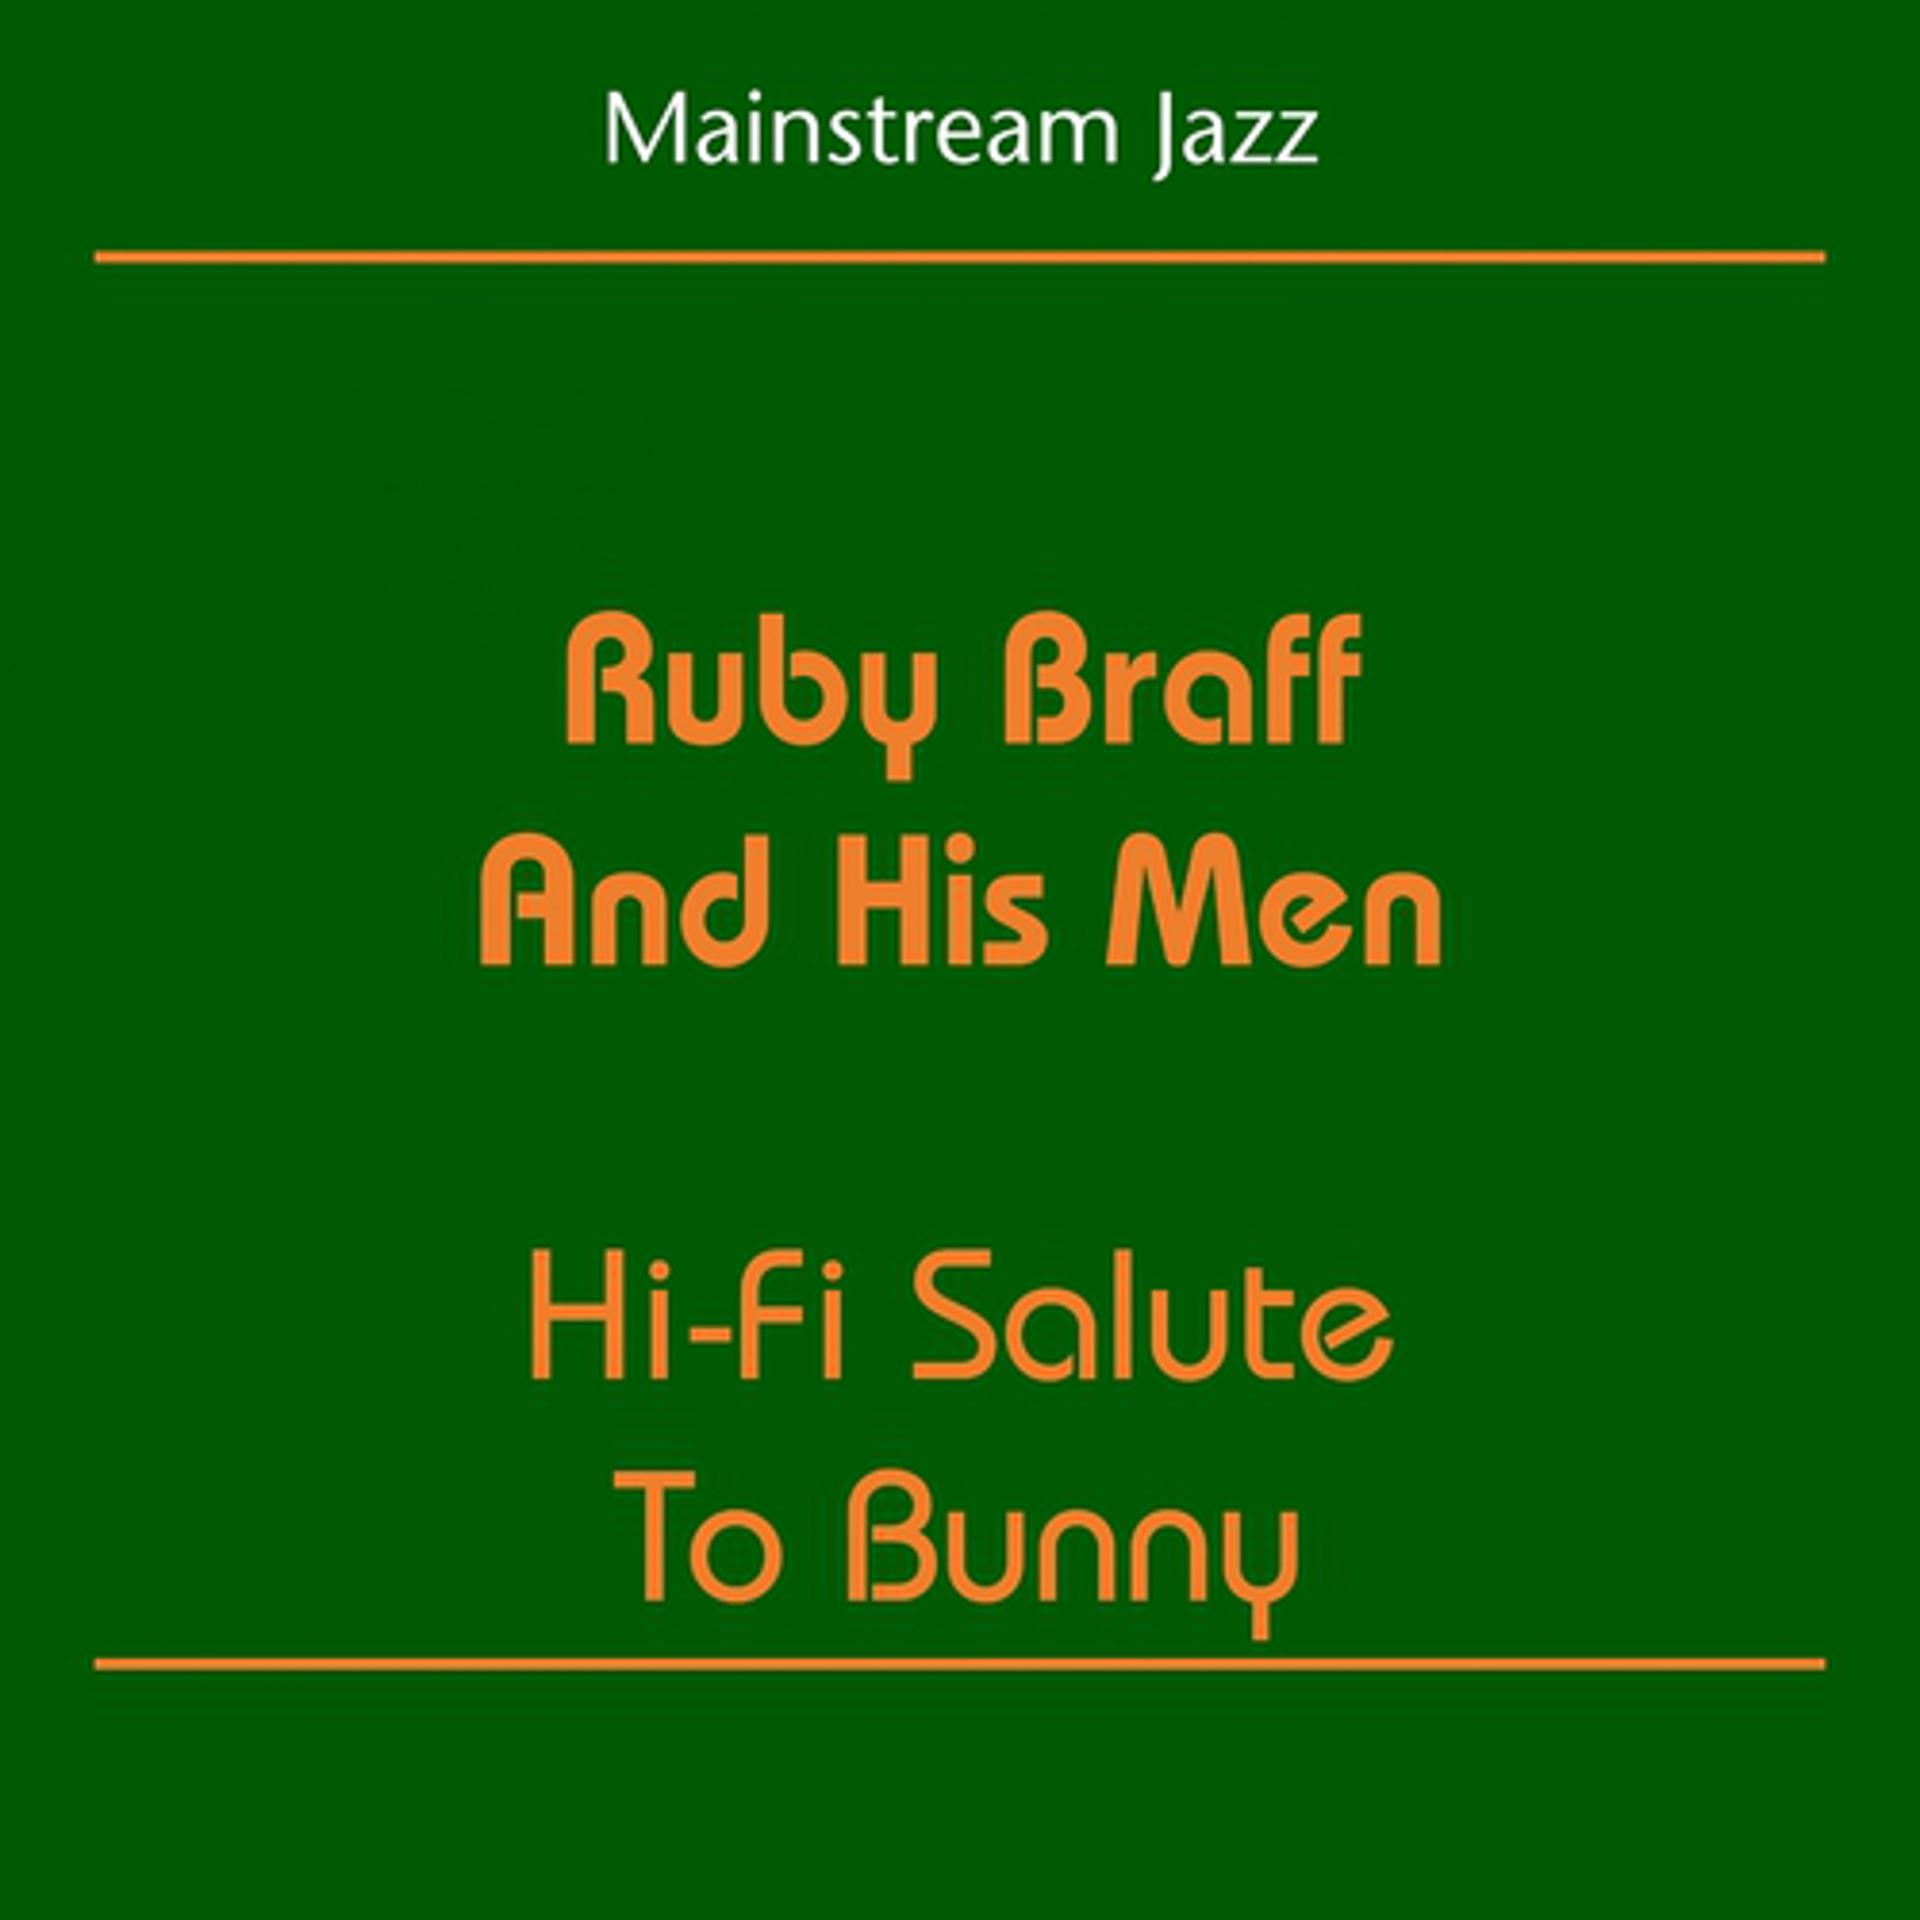 Постер альбома Mainstream Jazz (Ruby Braff And His Men - Hi-Fi Salute To Bunny)